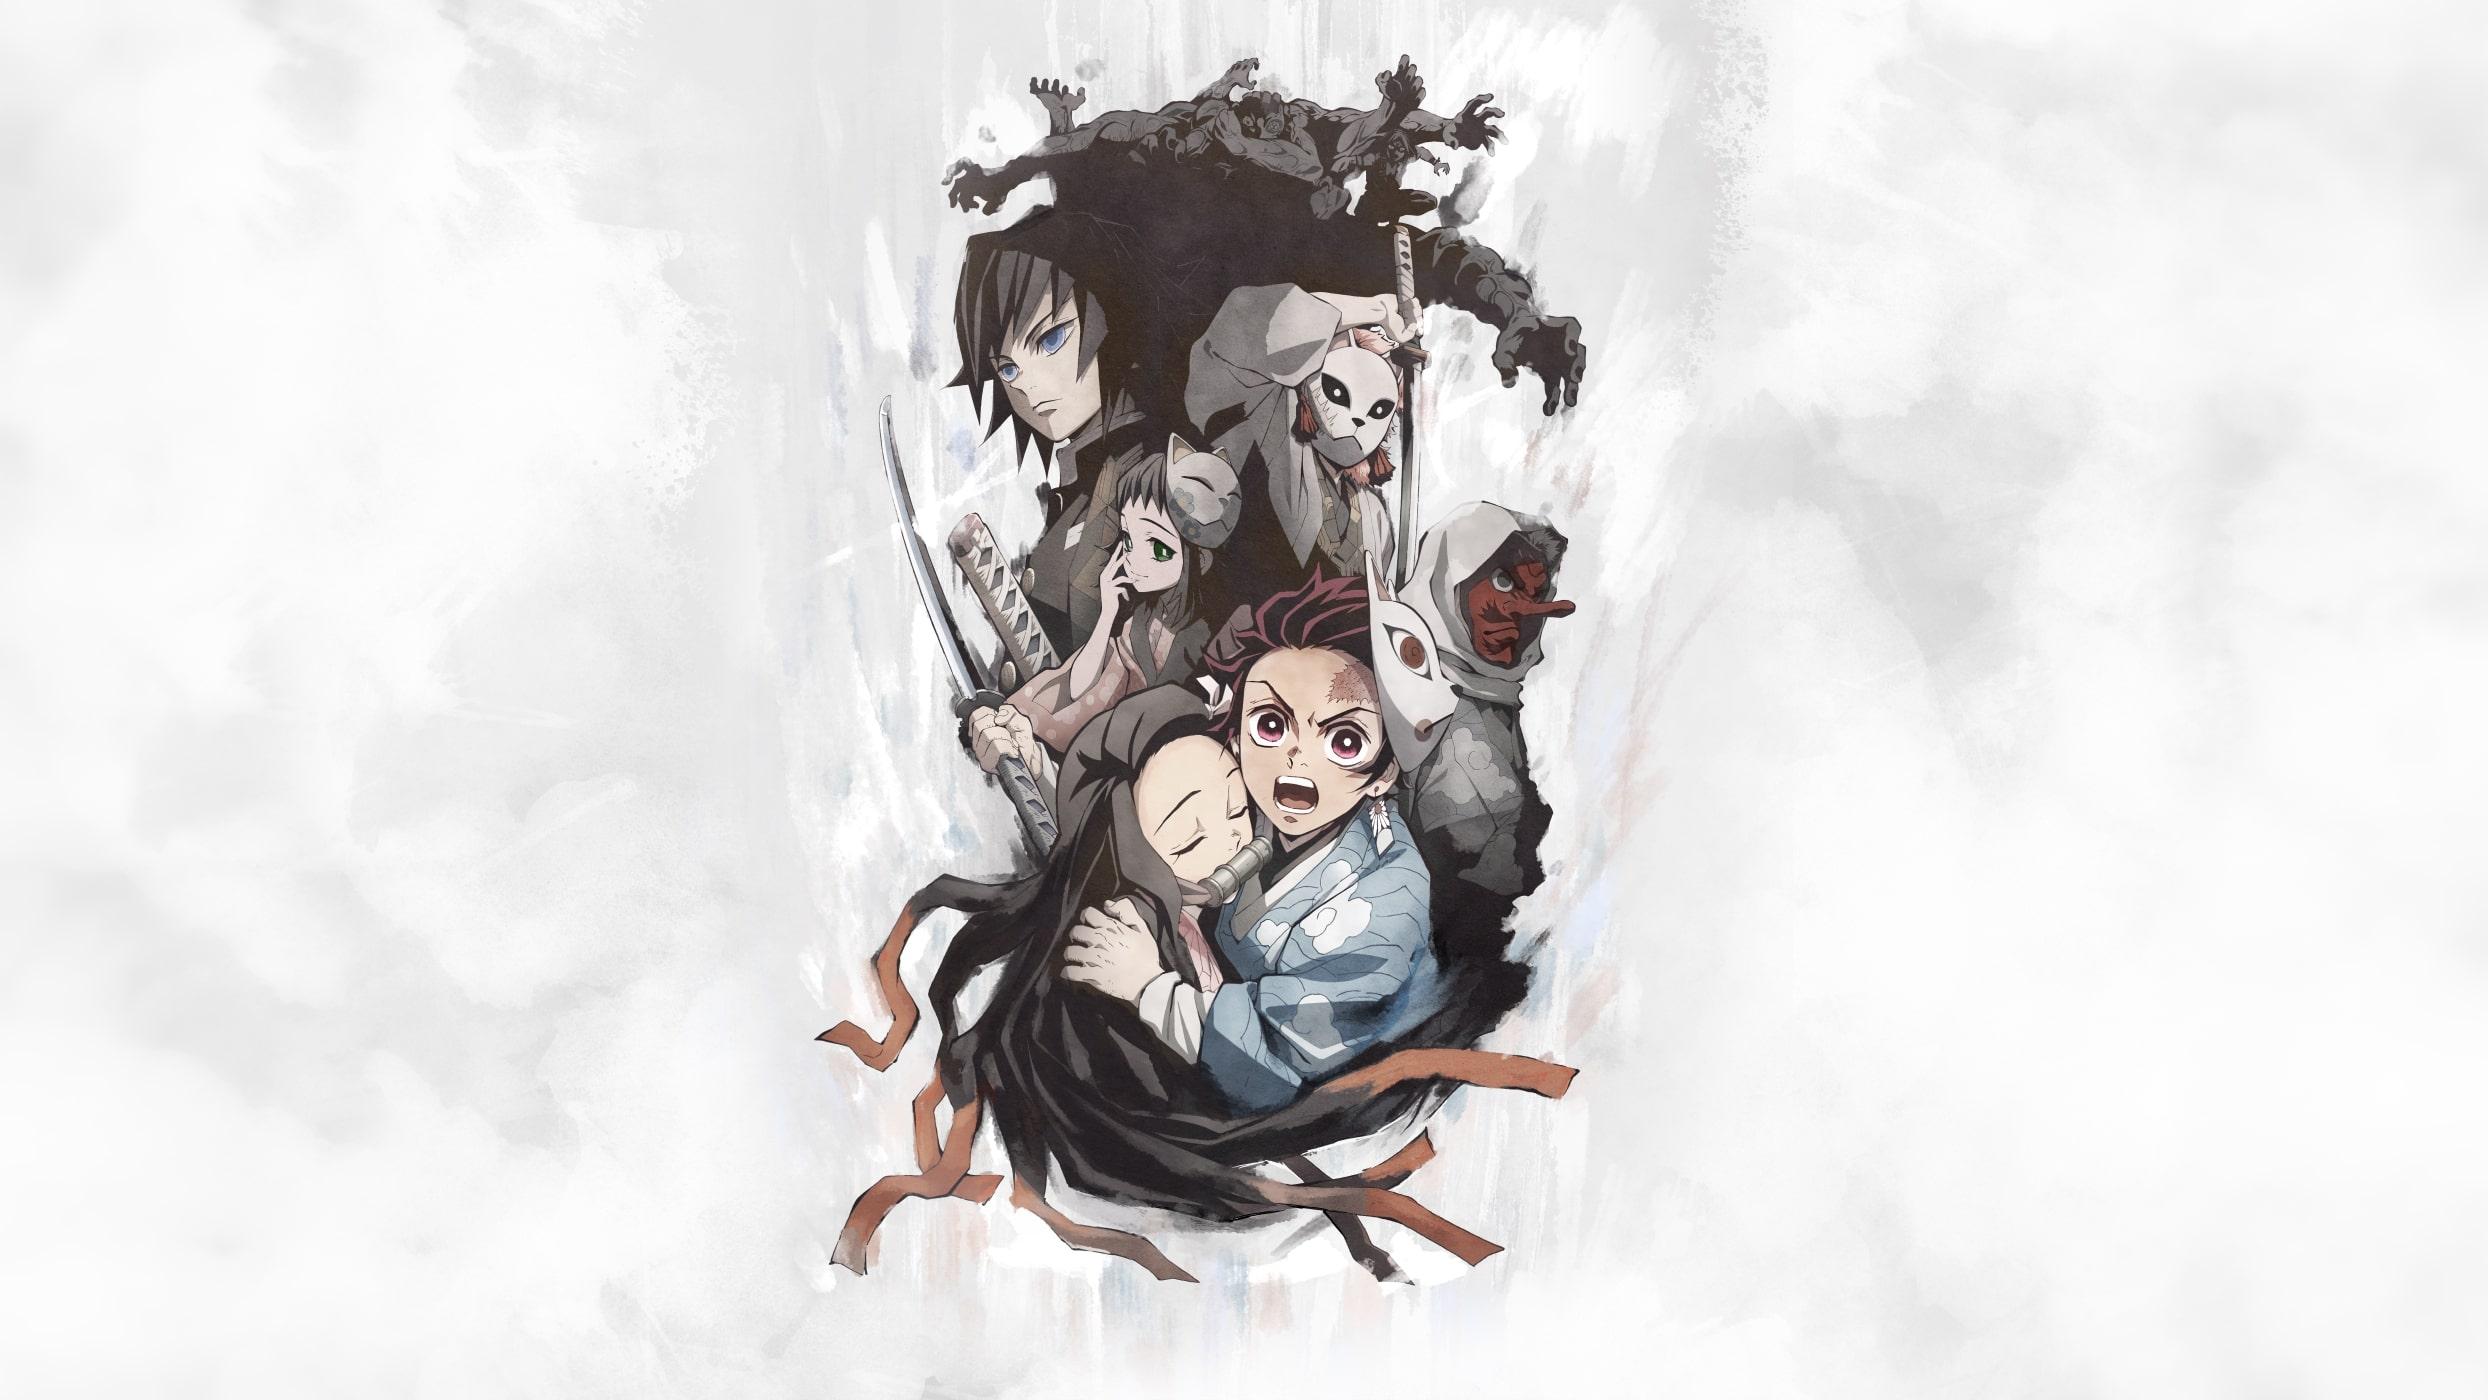 Wallpaper of Anime, Demon Slayer: Kimetsu no Yaiba background & HD